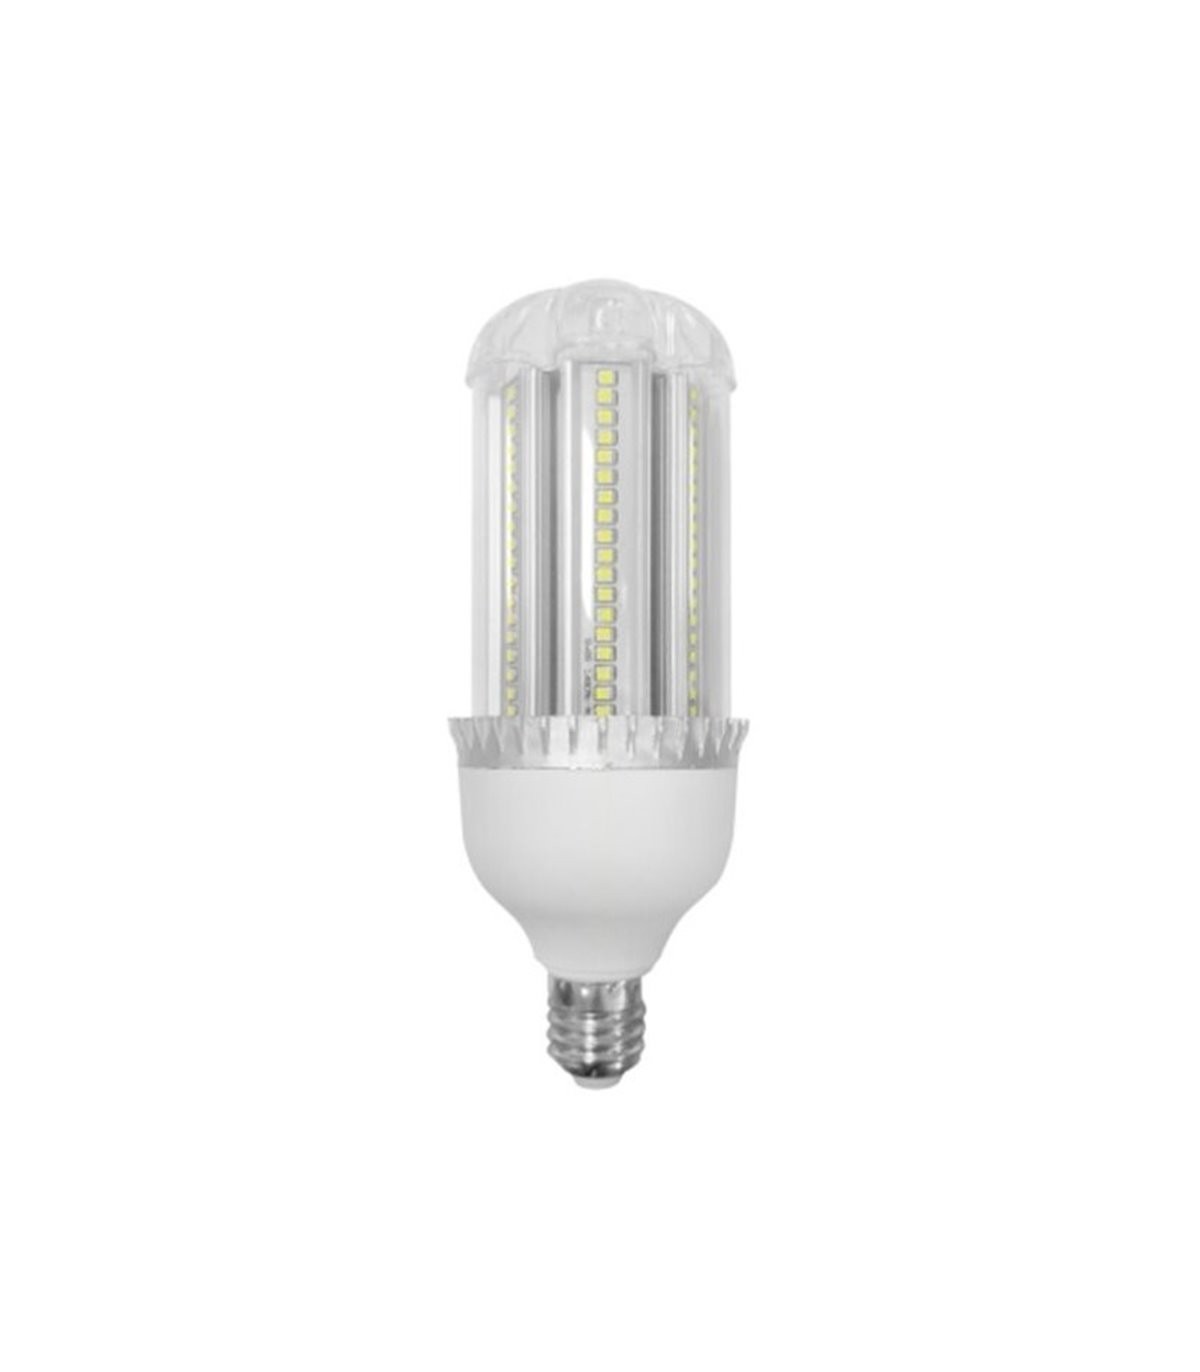 Lampadina LED con sensore di movimento e fotocellula 6W, E27, 4200K,  220-240V AC